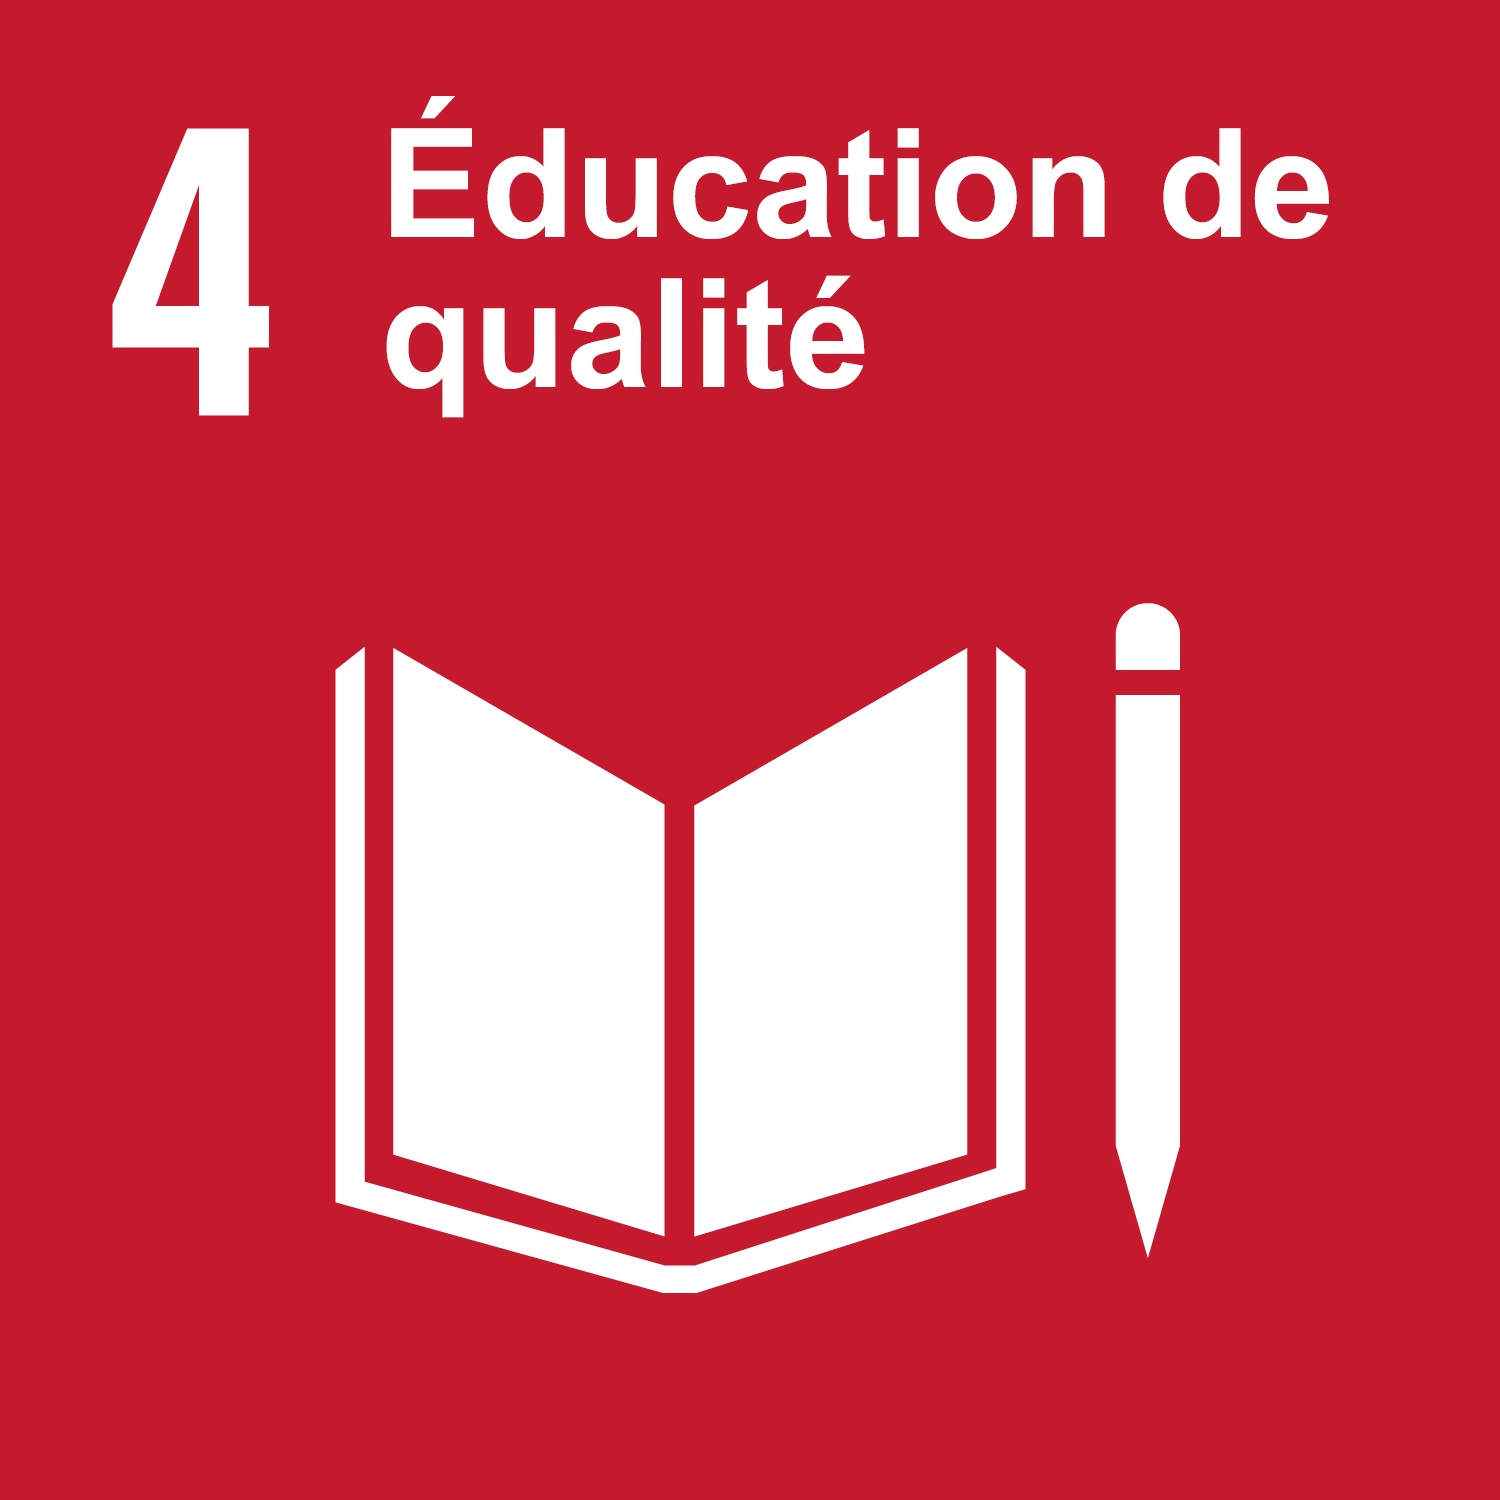 Goal 4: Quality education 